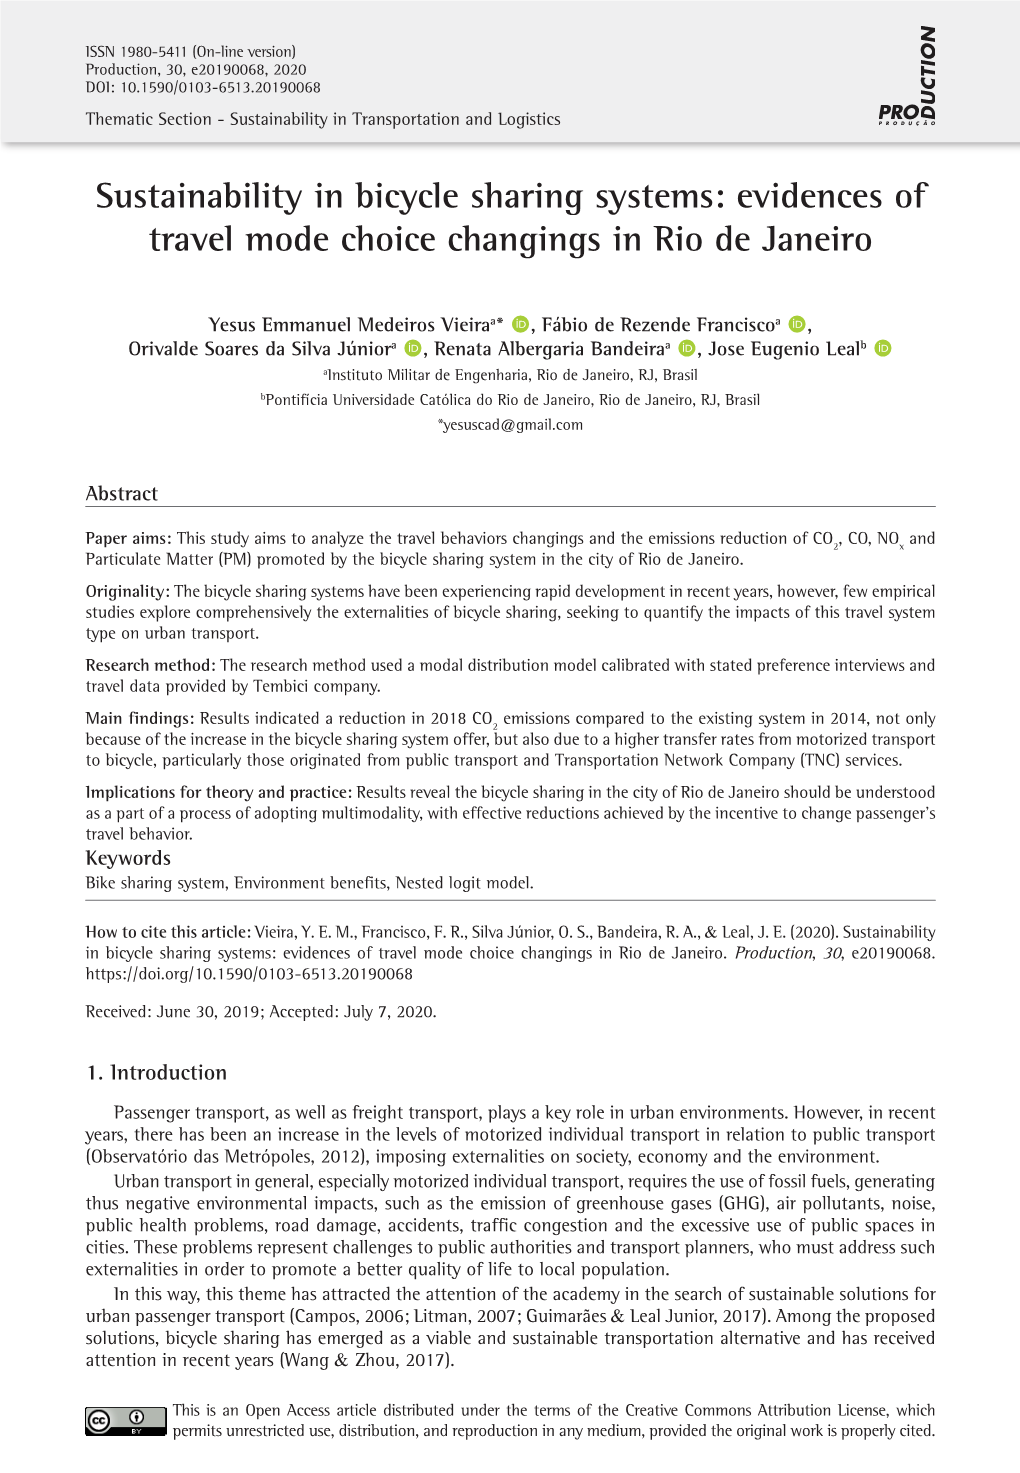 Evidences of Travel Mode Choice Changings in Rio De Janeiro